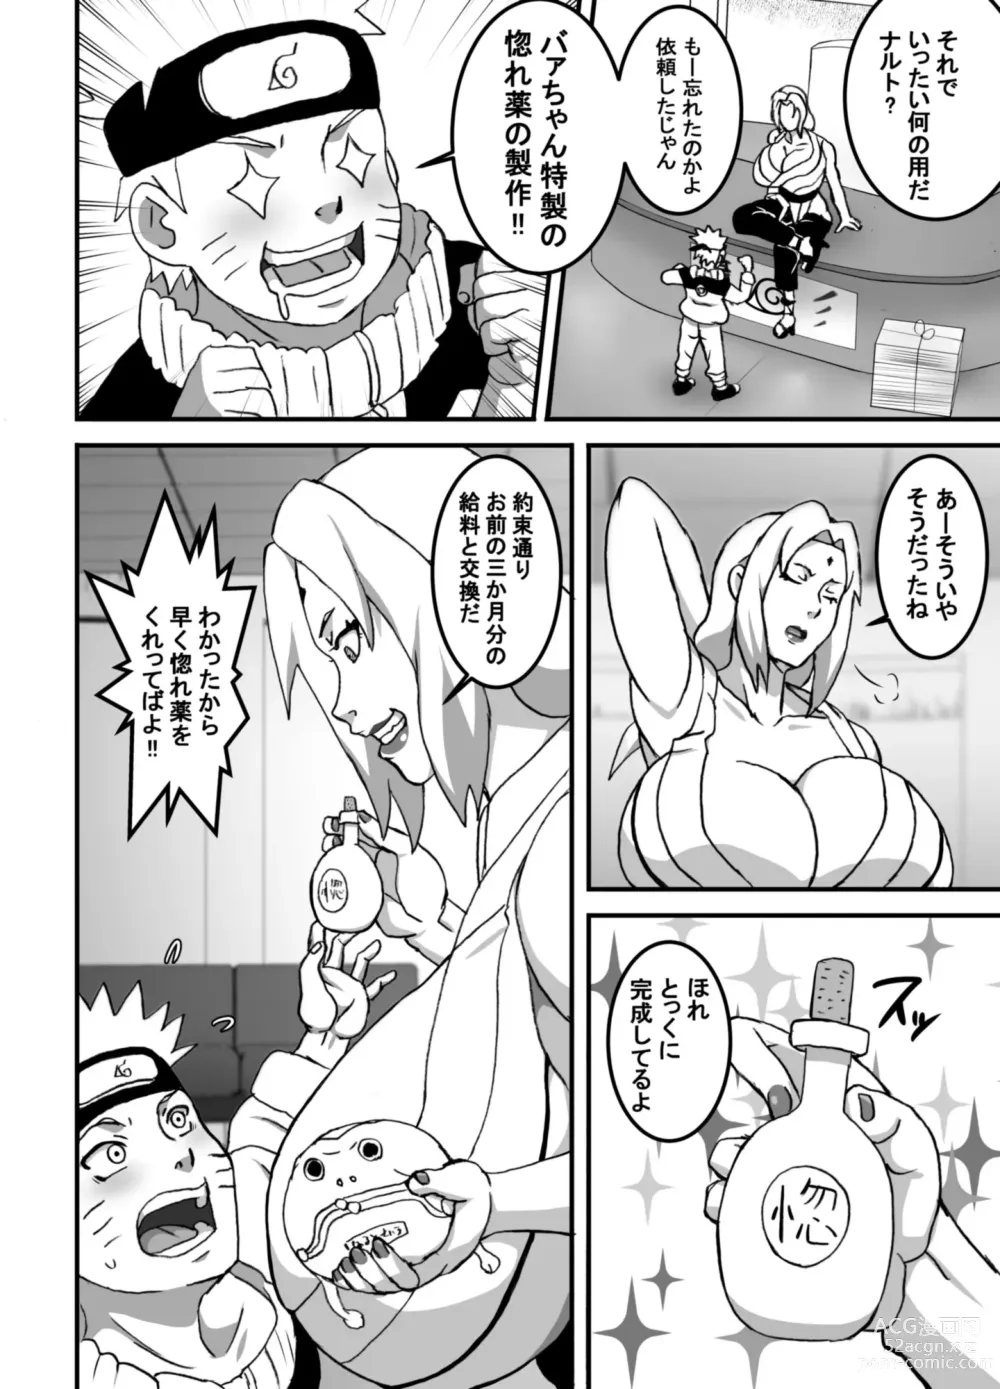 Page 6 of doujinshi Torotsuna